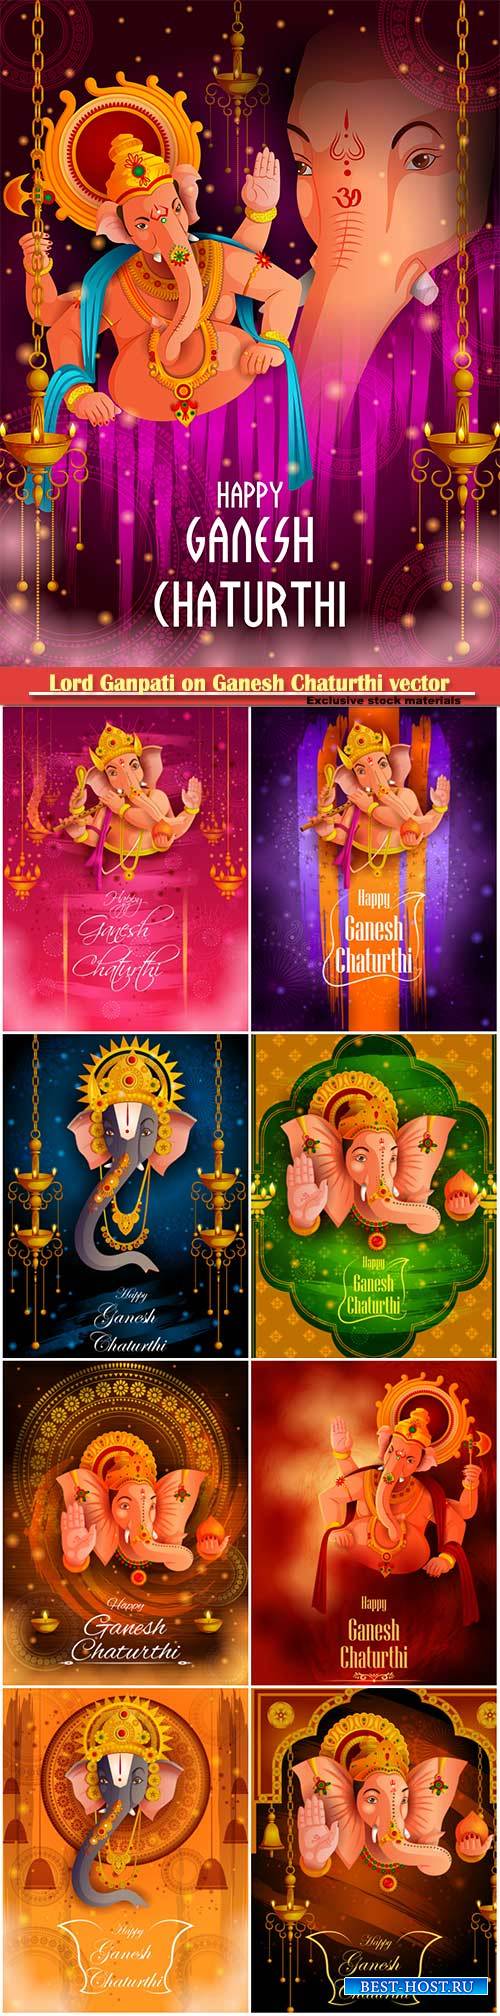 Lord Ganpati on Ganesh Chaturthi vector background